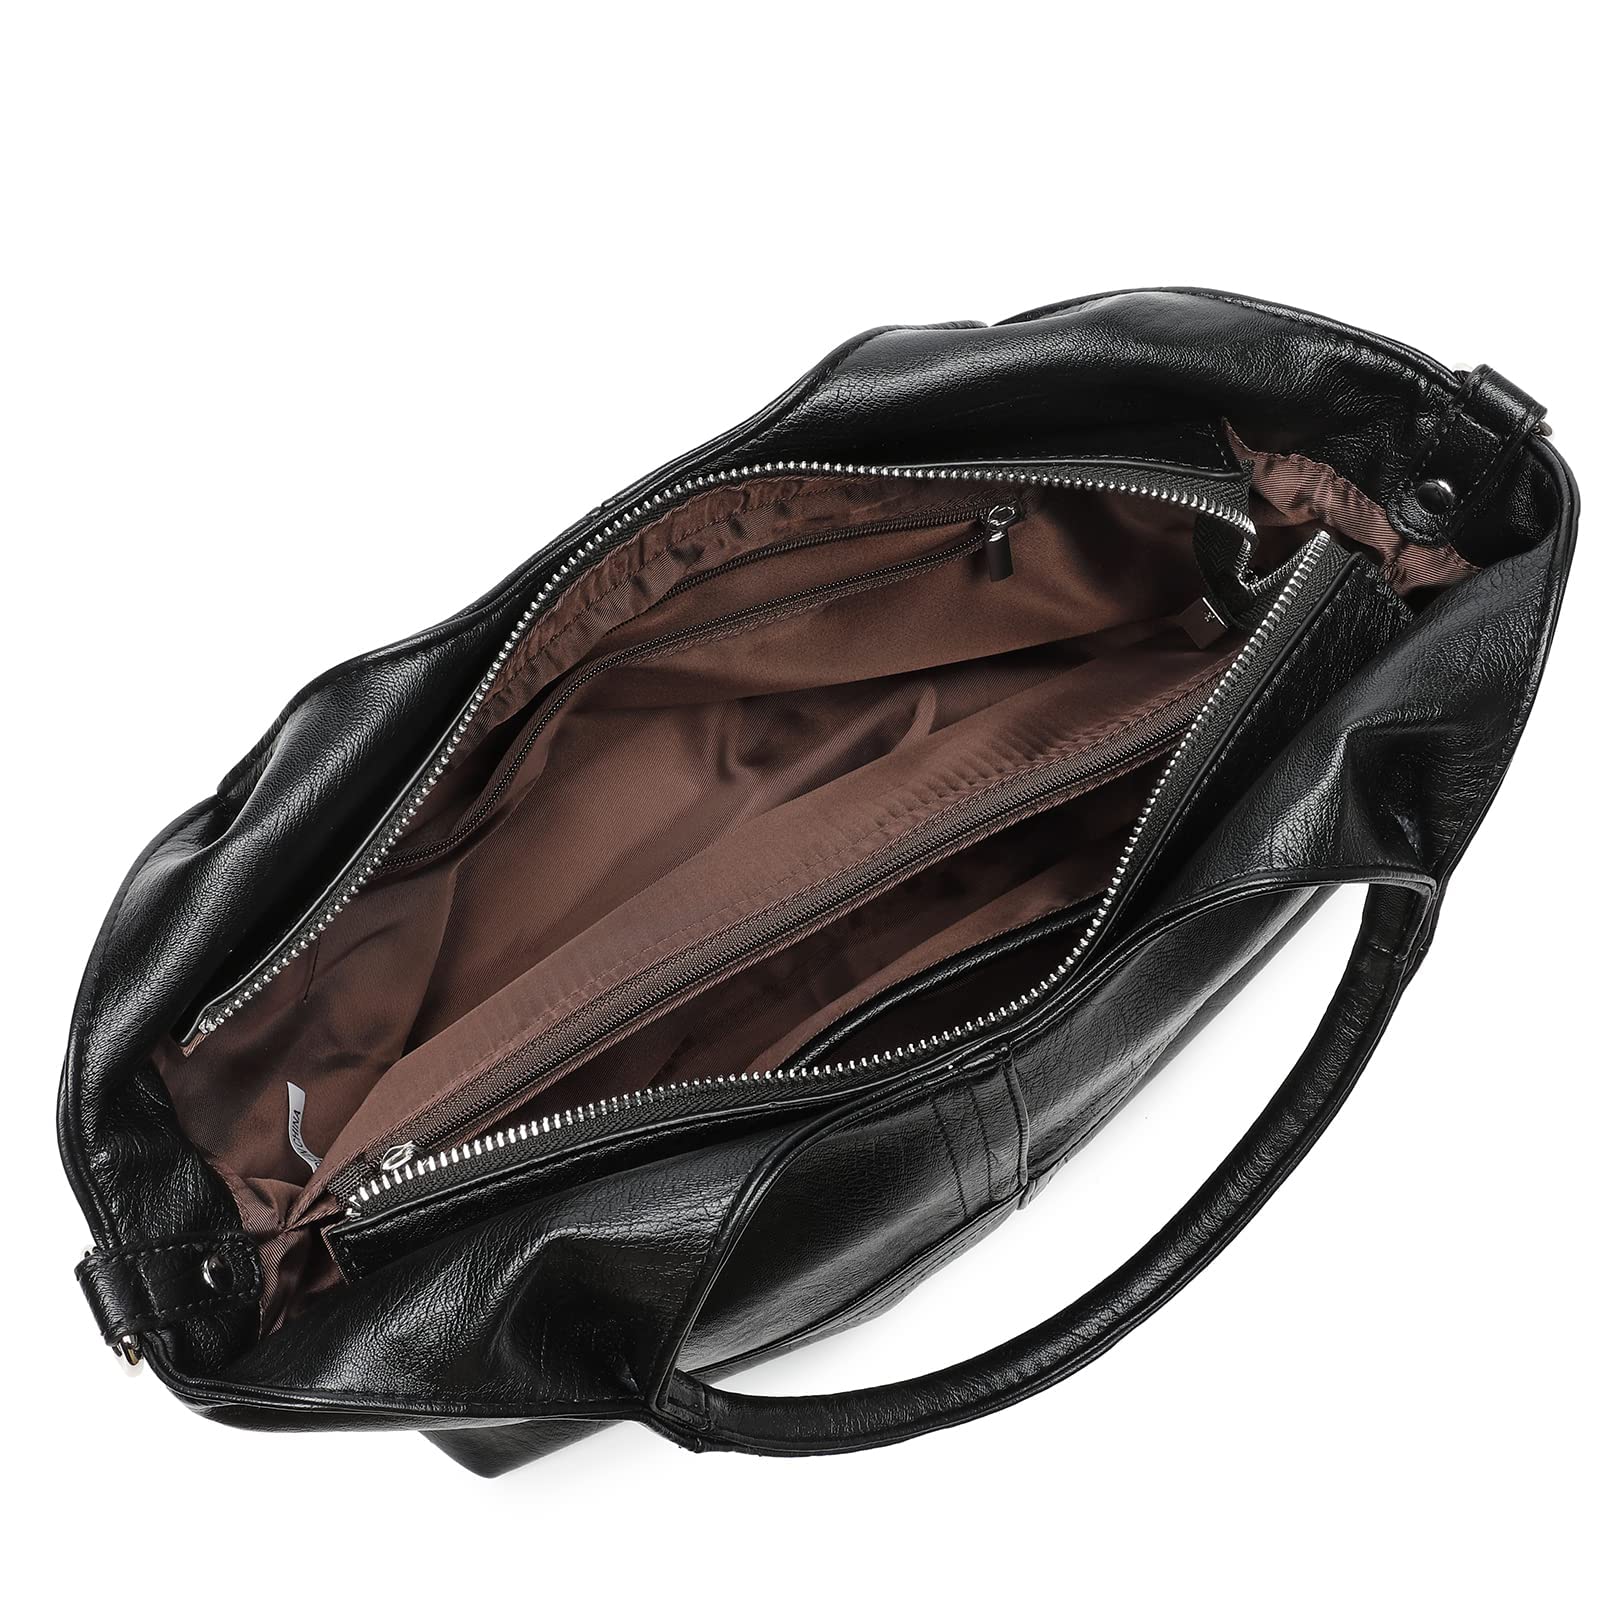 KOGTLA Womens Leather Handbags Tote Bag Shoulder Bag Top Handle Satchel Ladies Purse Crossbody Hobo Bag